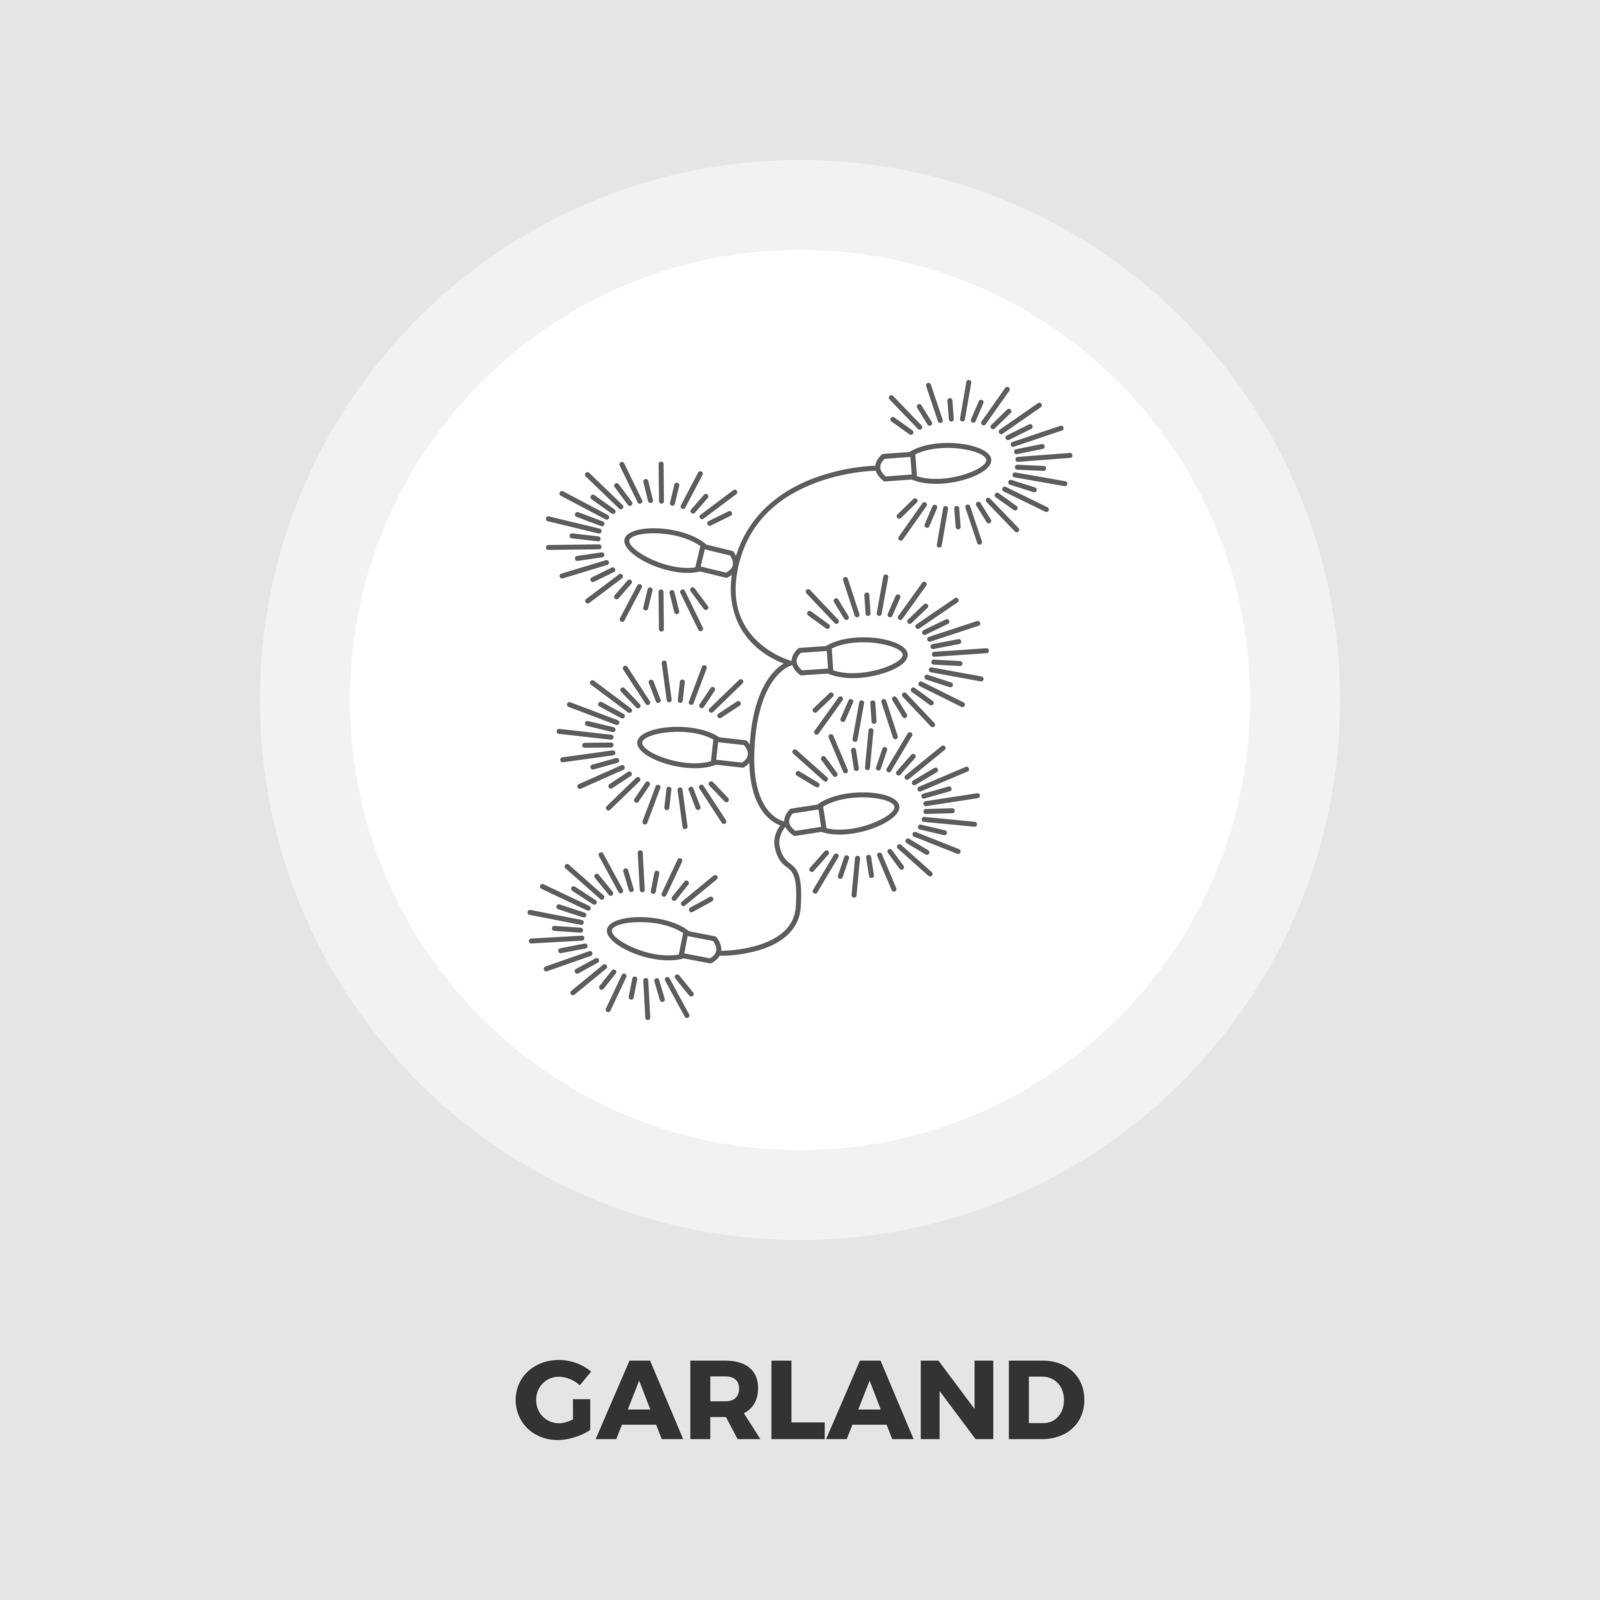 Garland flat icon by smoki